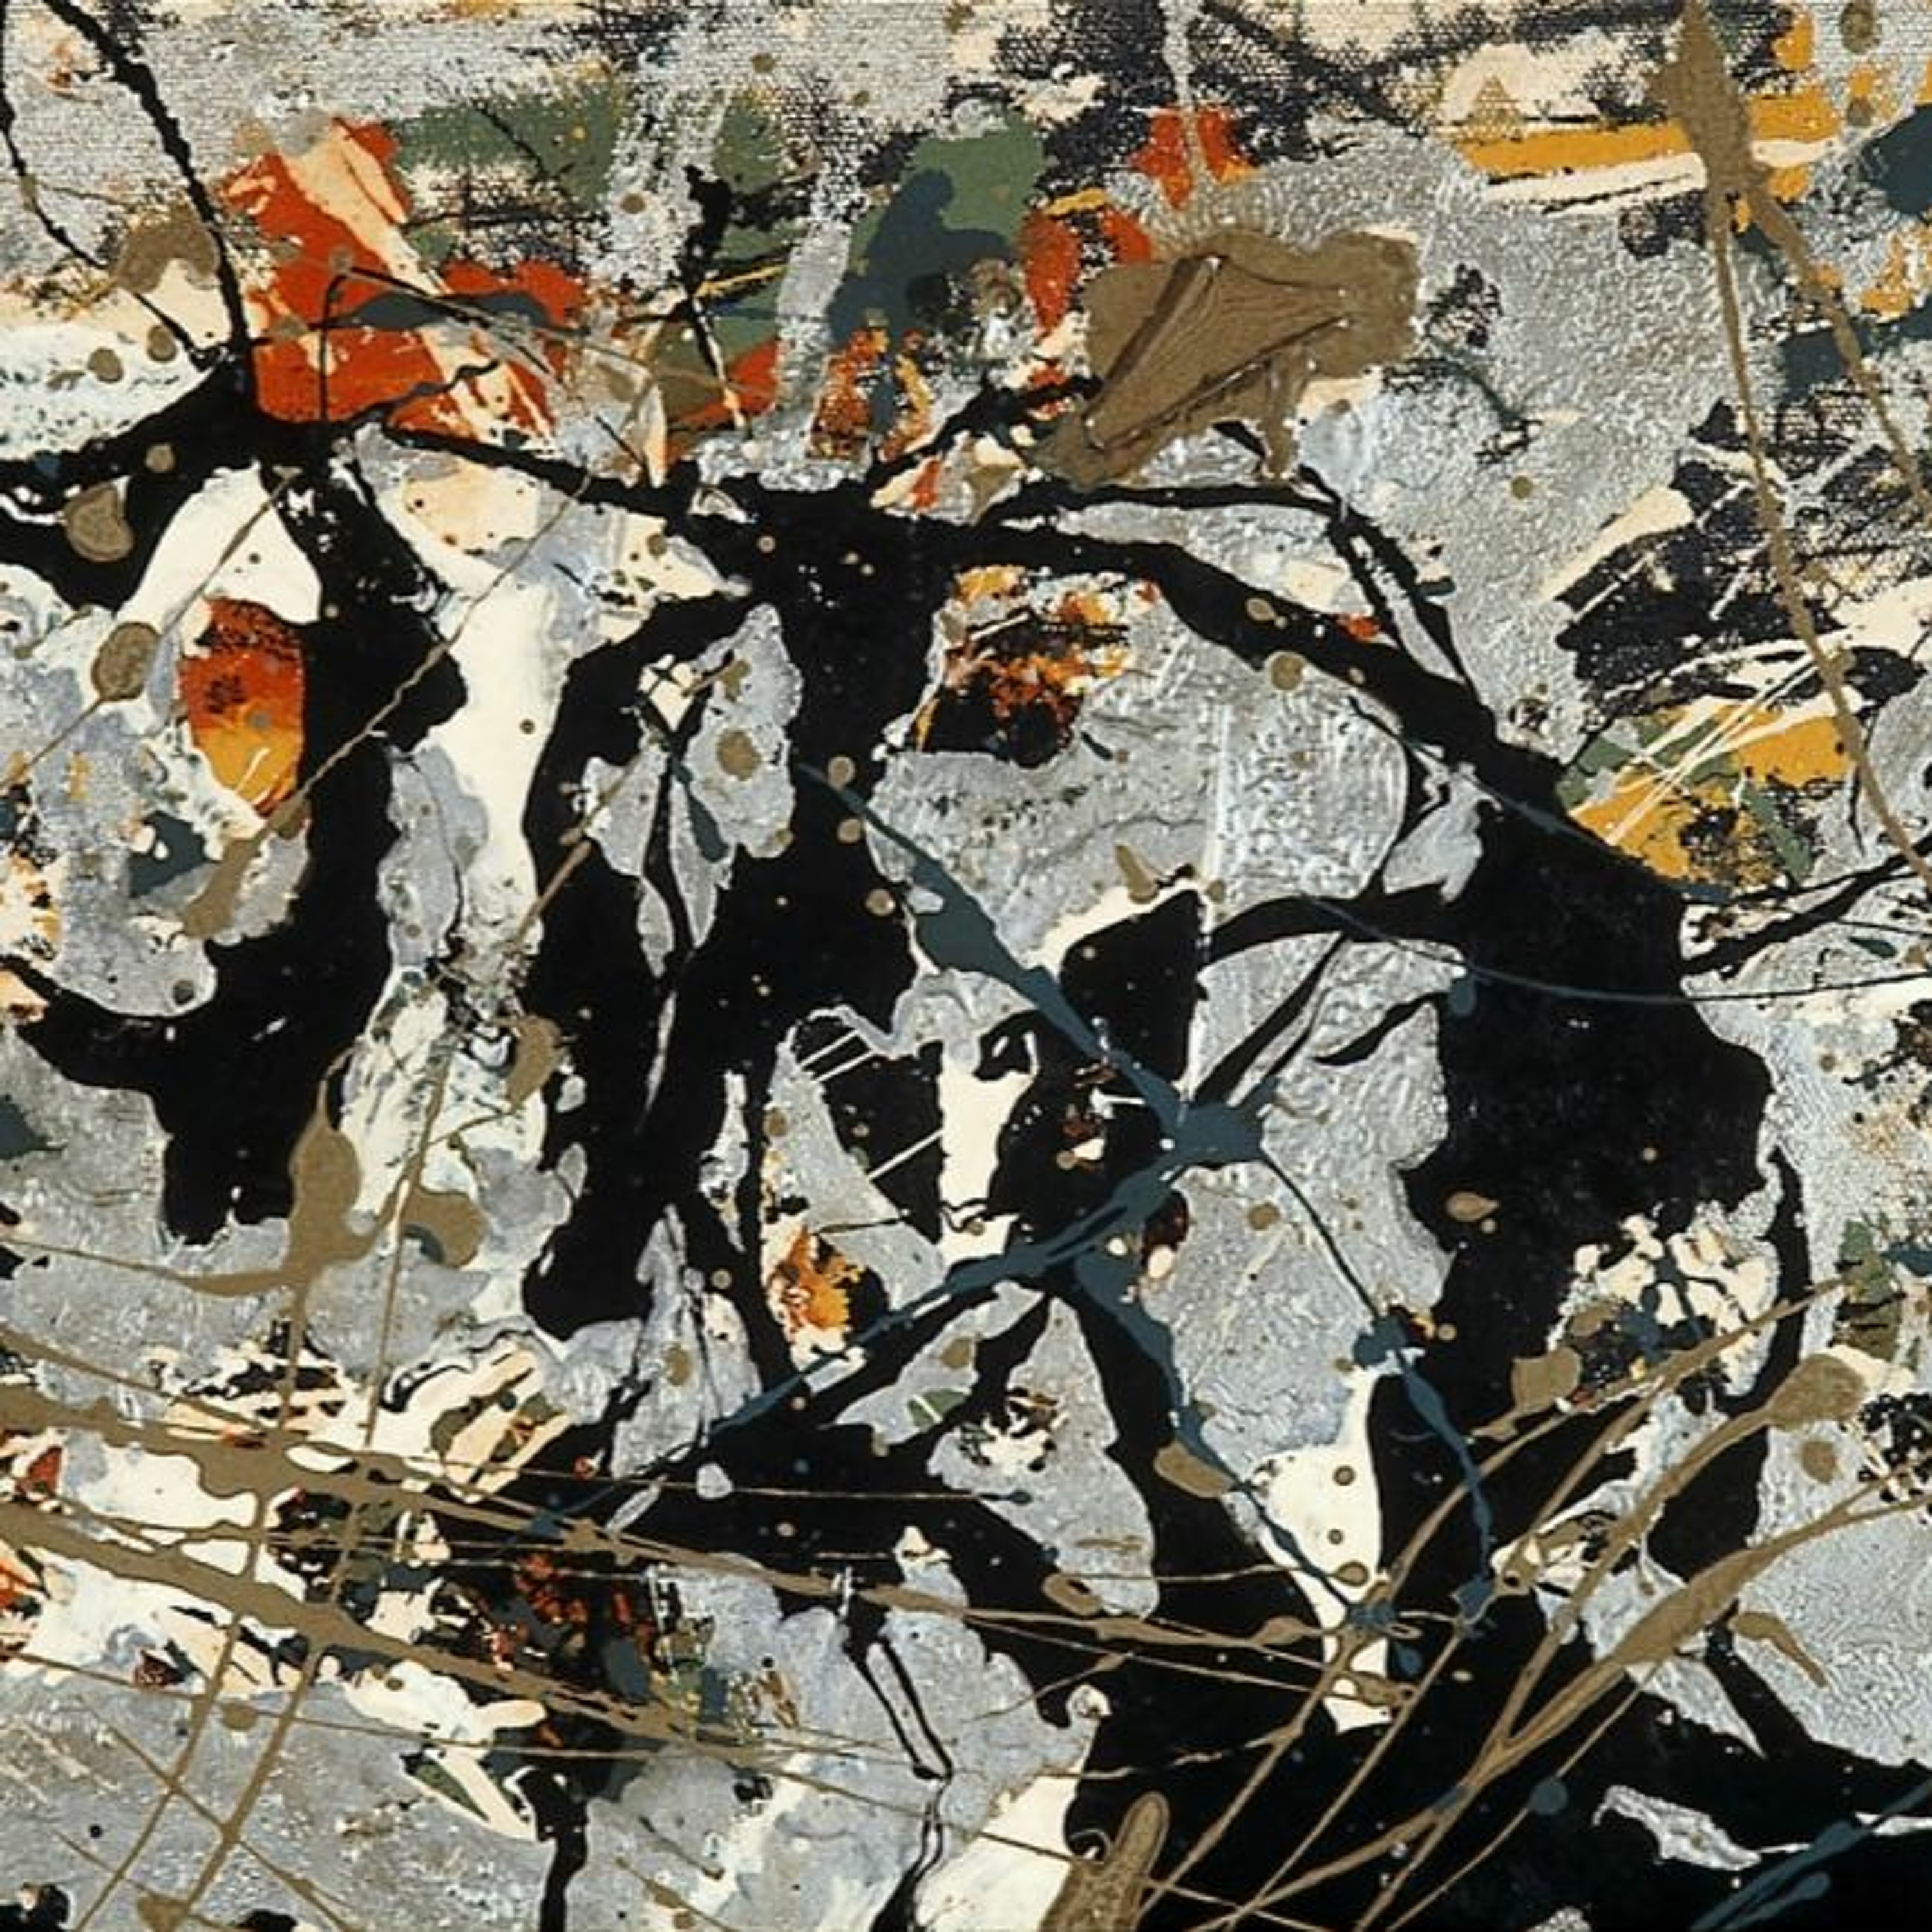 Ep. 12 - Jackson Pollock's "Number 10, 1949" (1949)